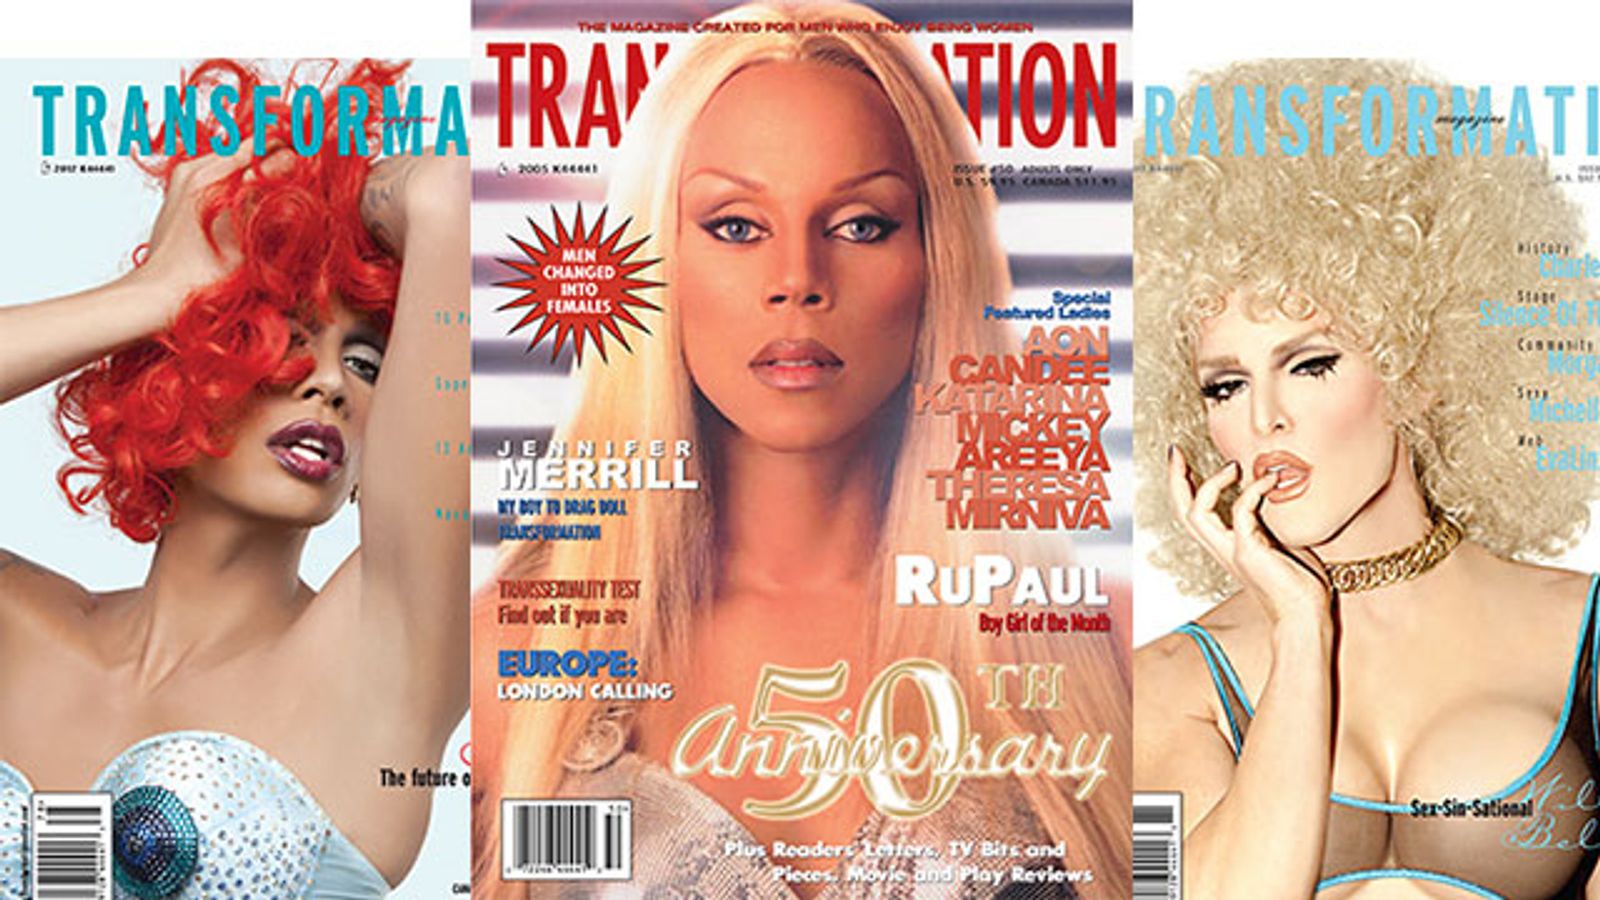 Transformation Magazine Set to Exhibit at RuPaul's Drag Con